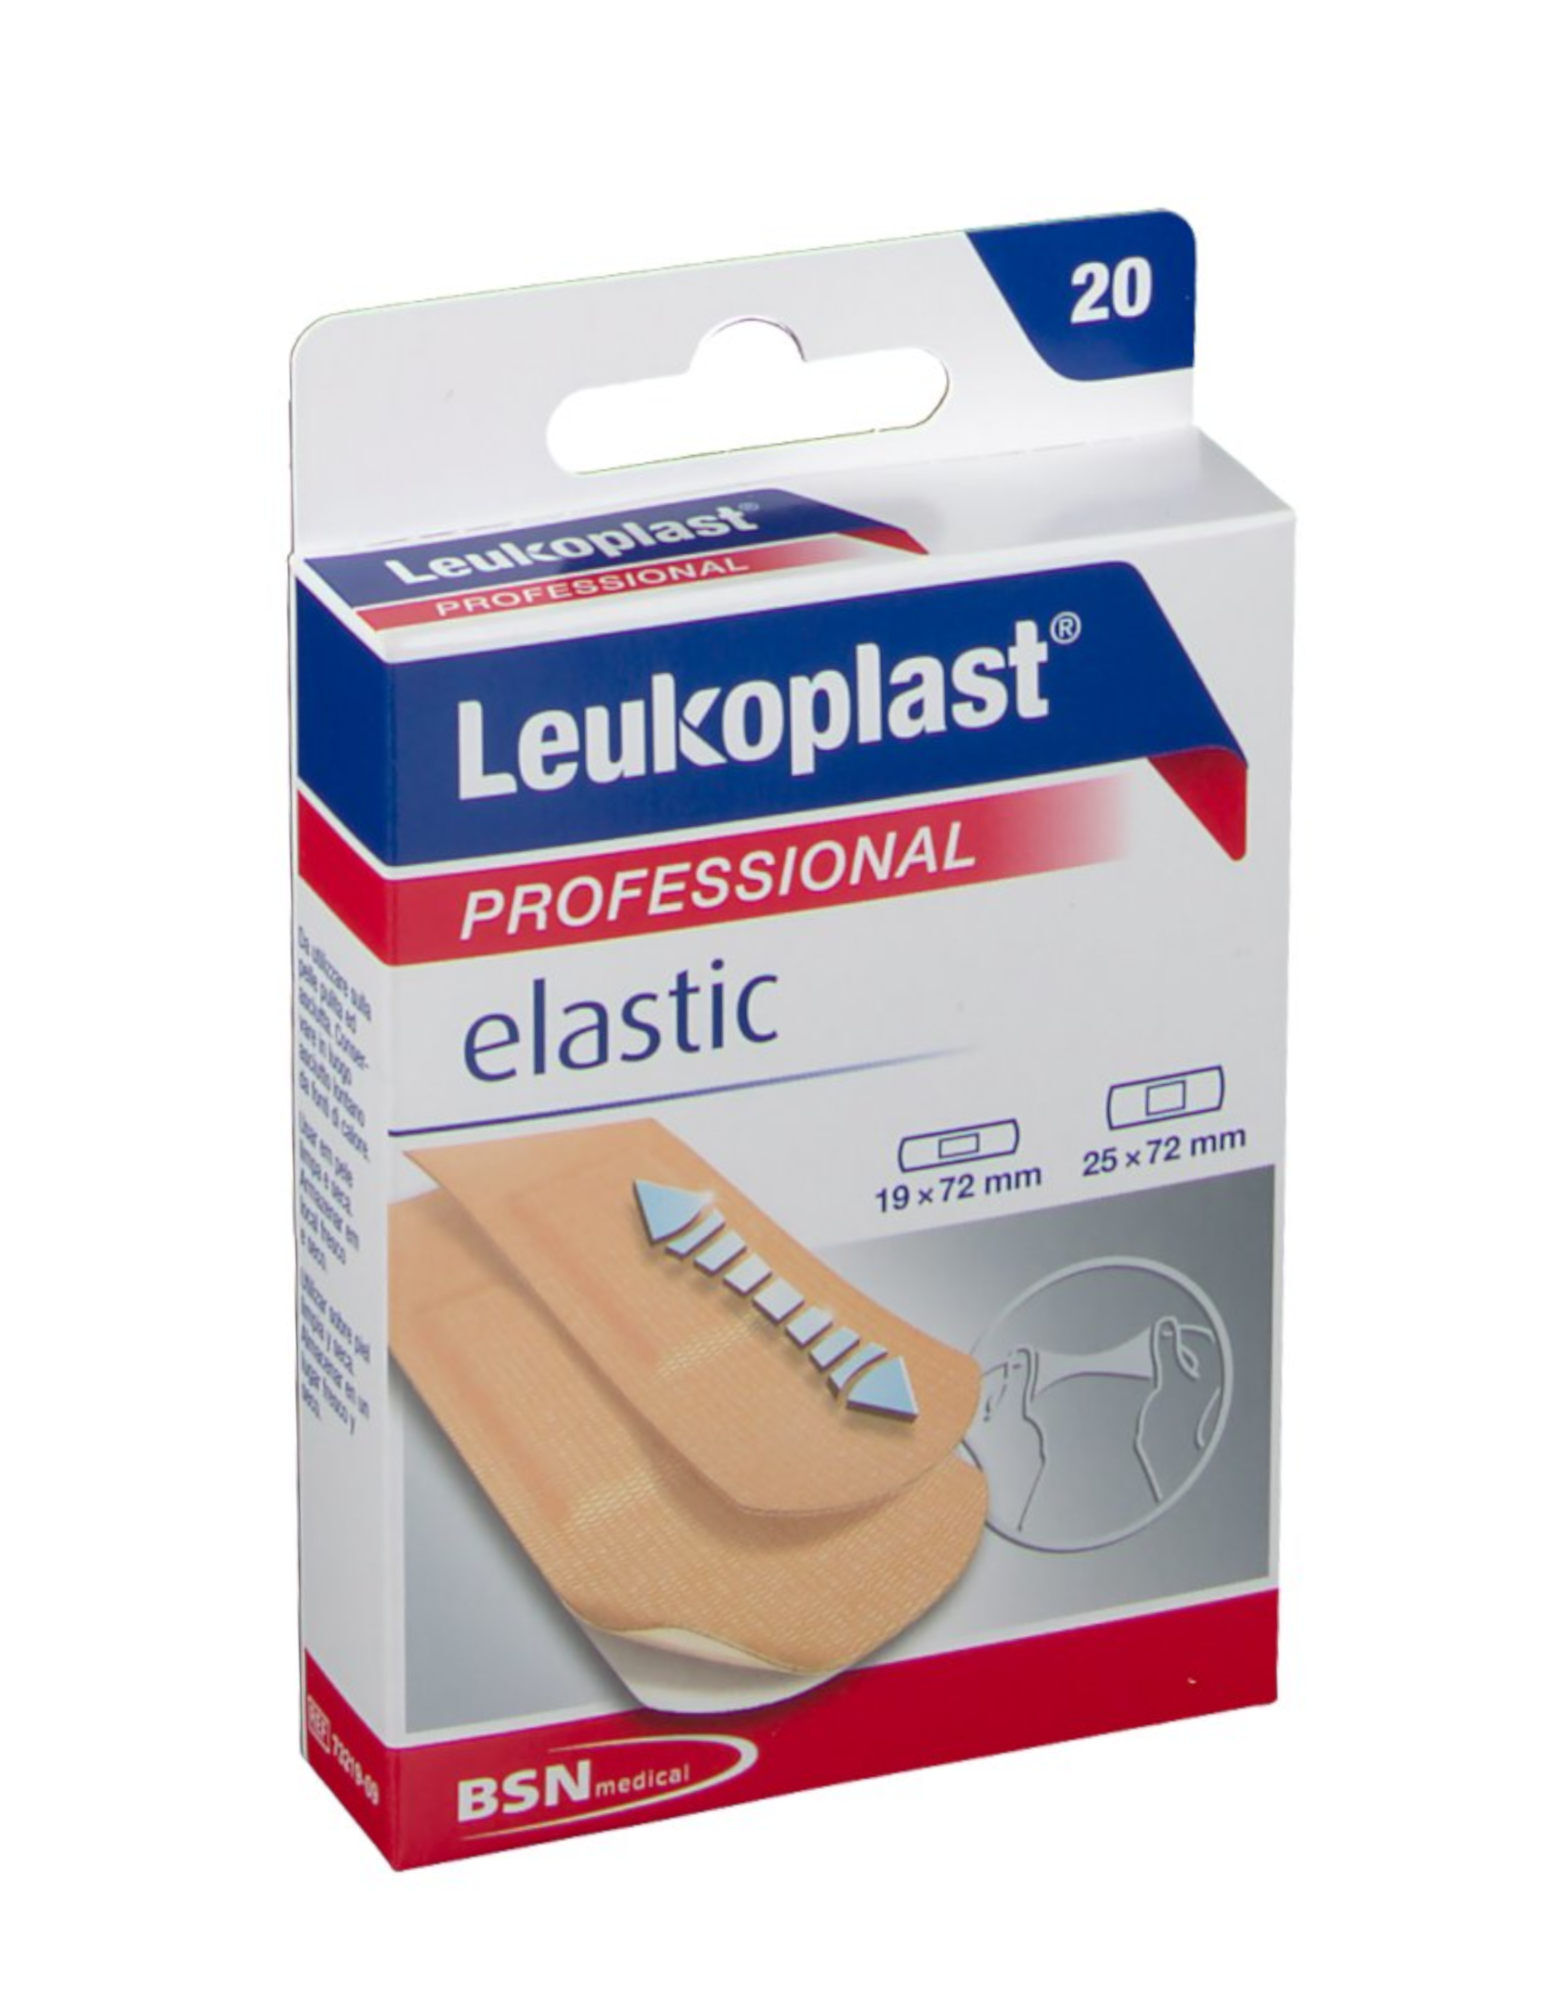 BSN MEDICAL Leukoplast - Elastic 20 Cerotti X 2 M